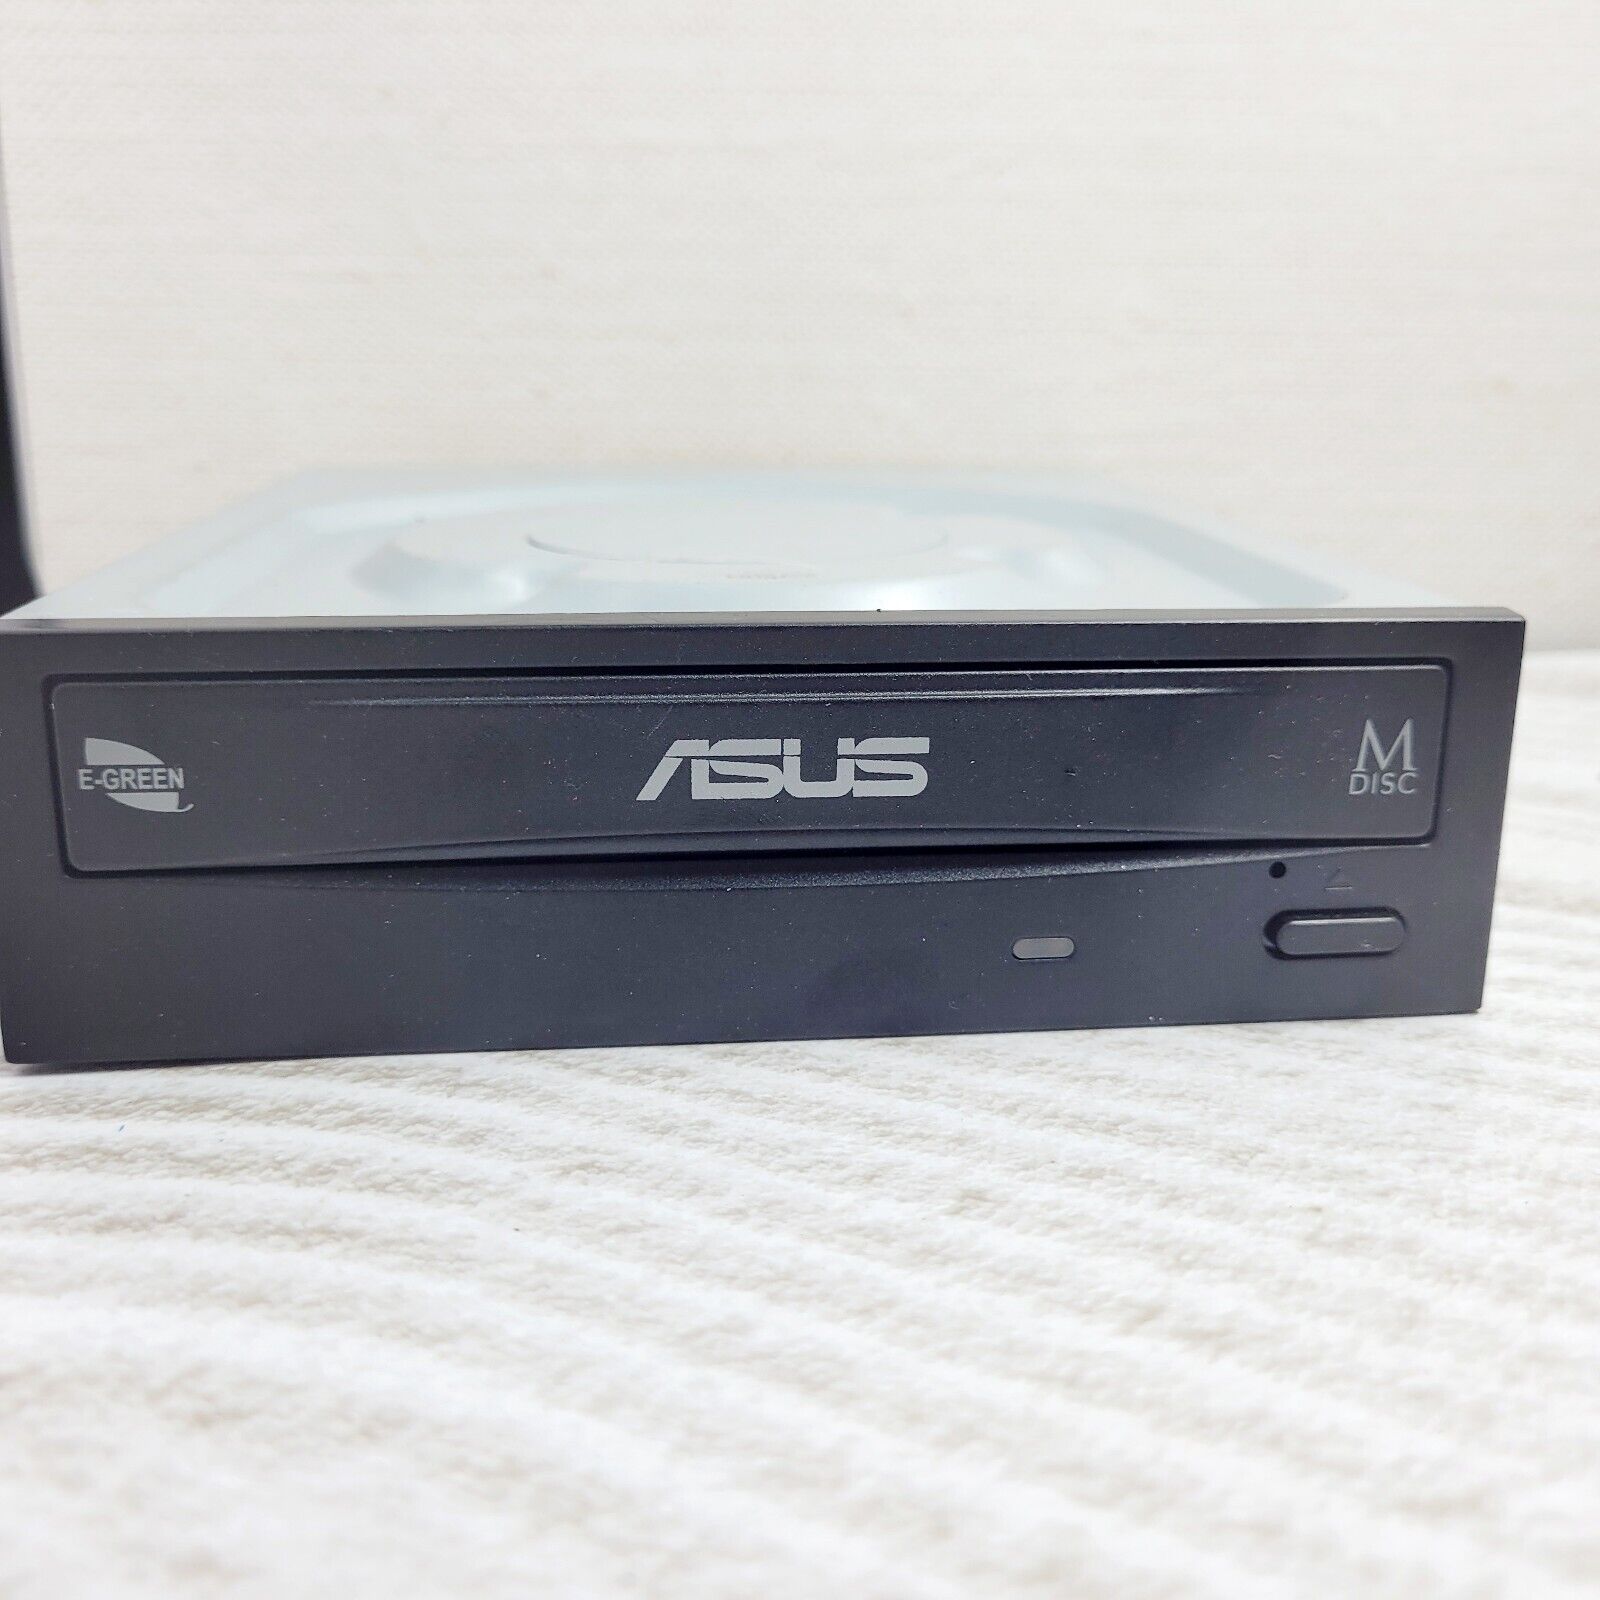 ASUS DRW-24B1ST 24x DVD-RW Internal Optical Disc